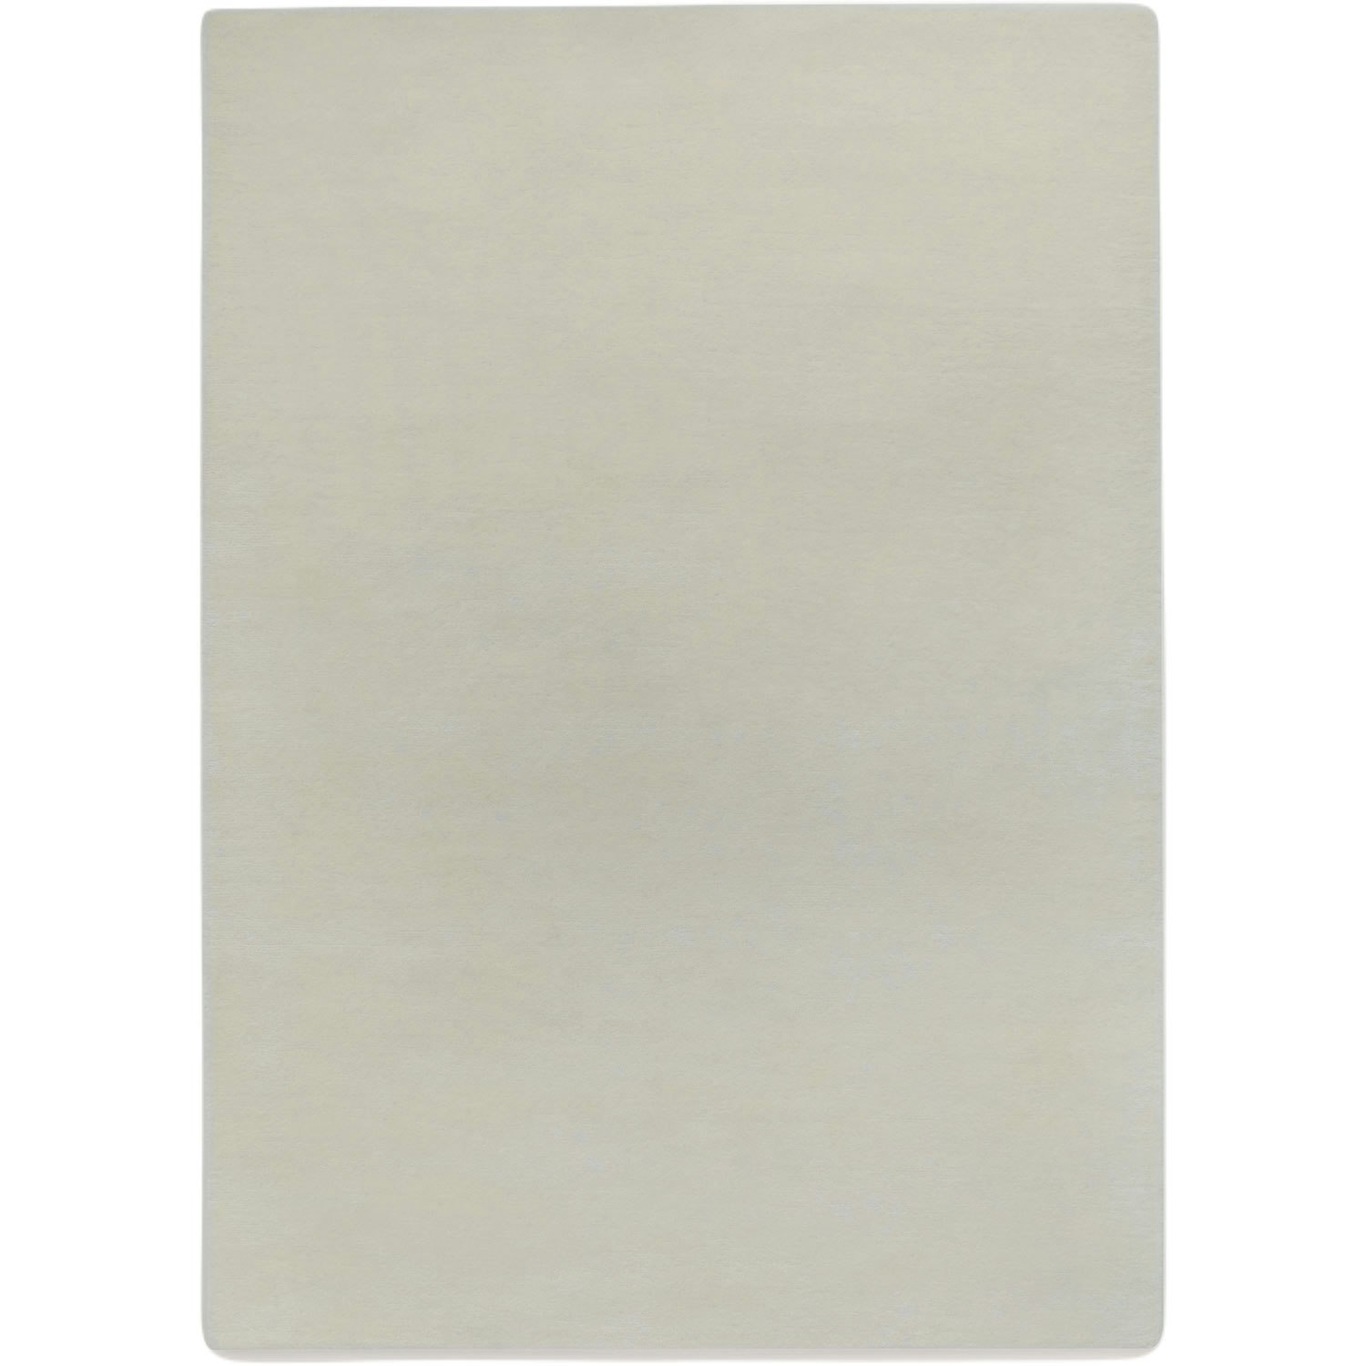 Liljehok Ullteppe Off-white, 250x350 cm